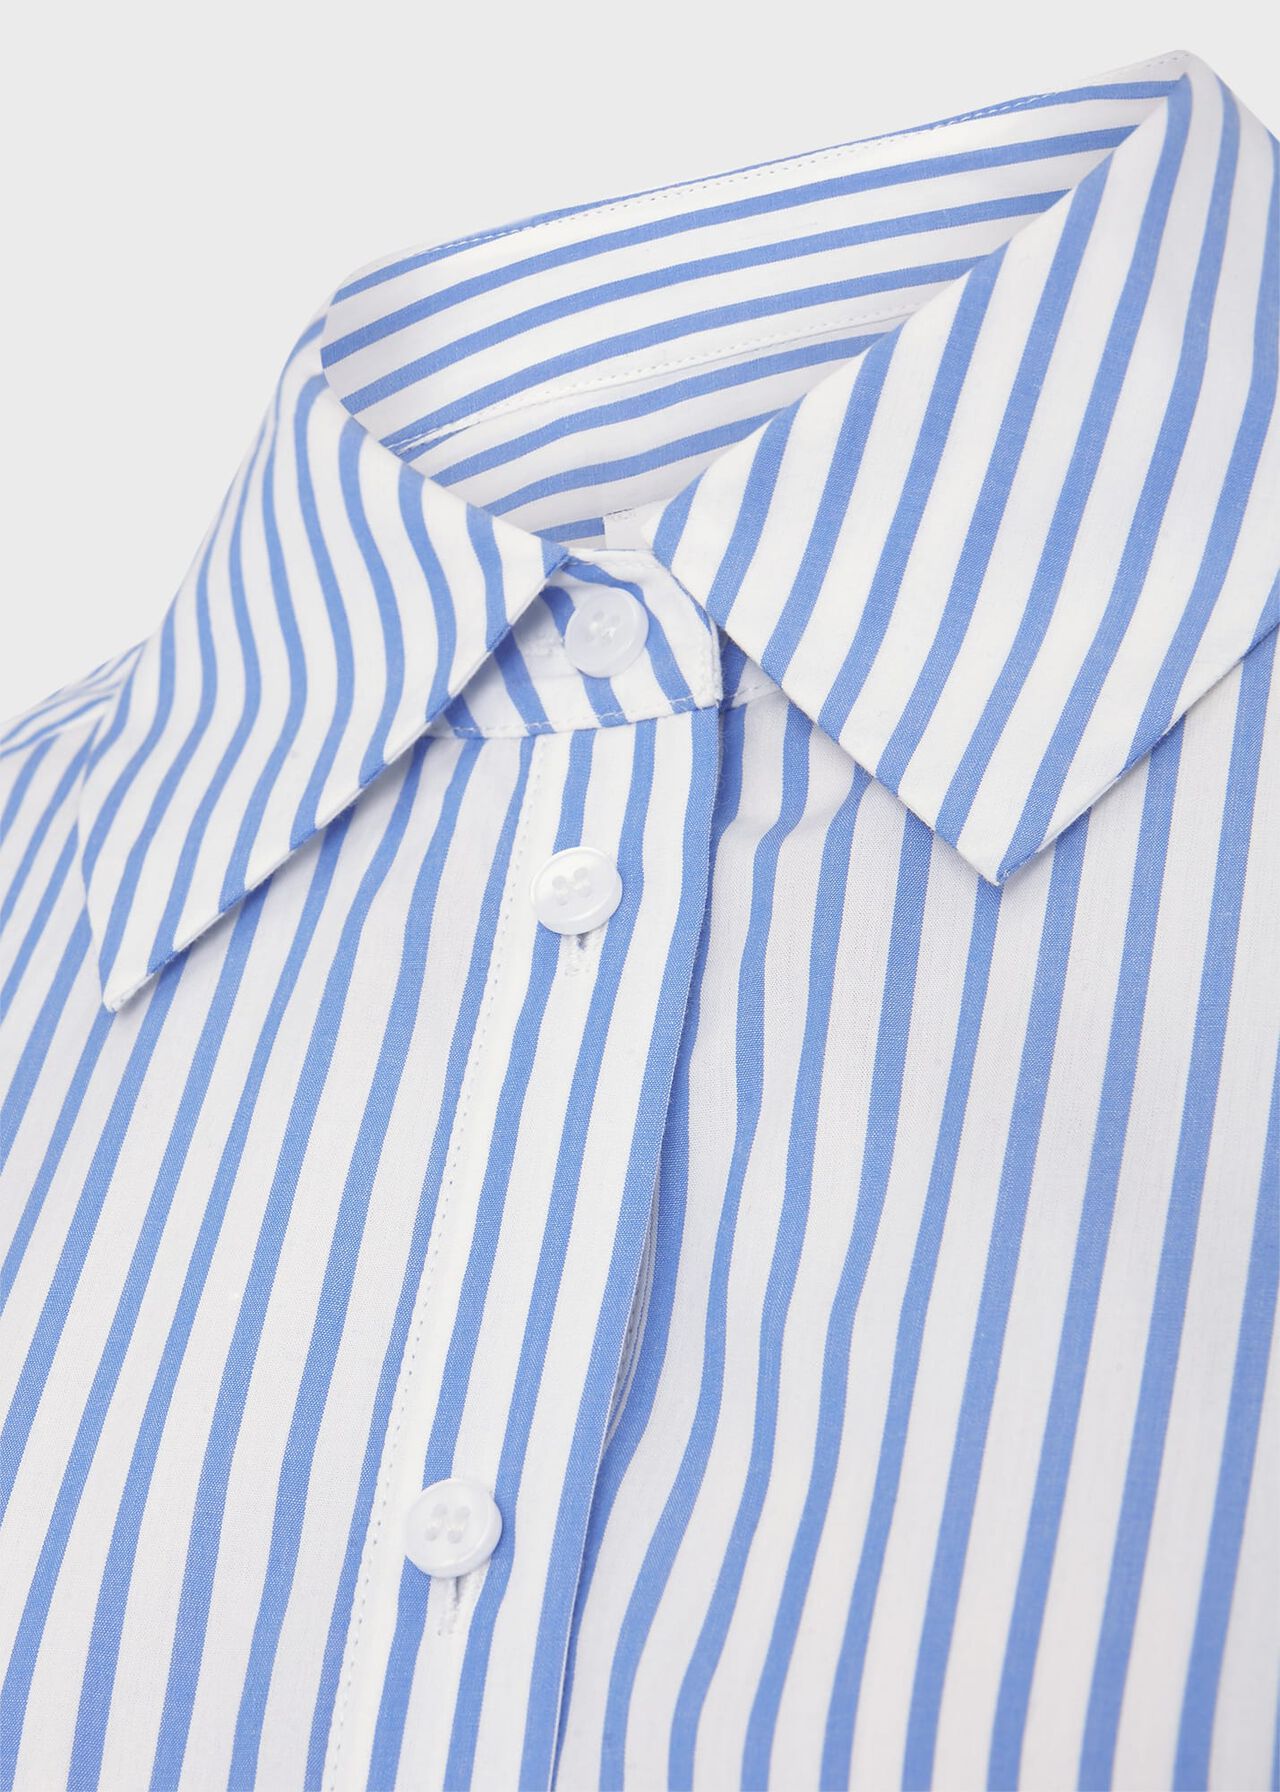 Wentworth Shirt, Blue White, hi-res